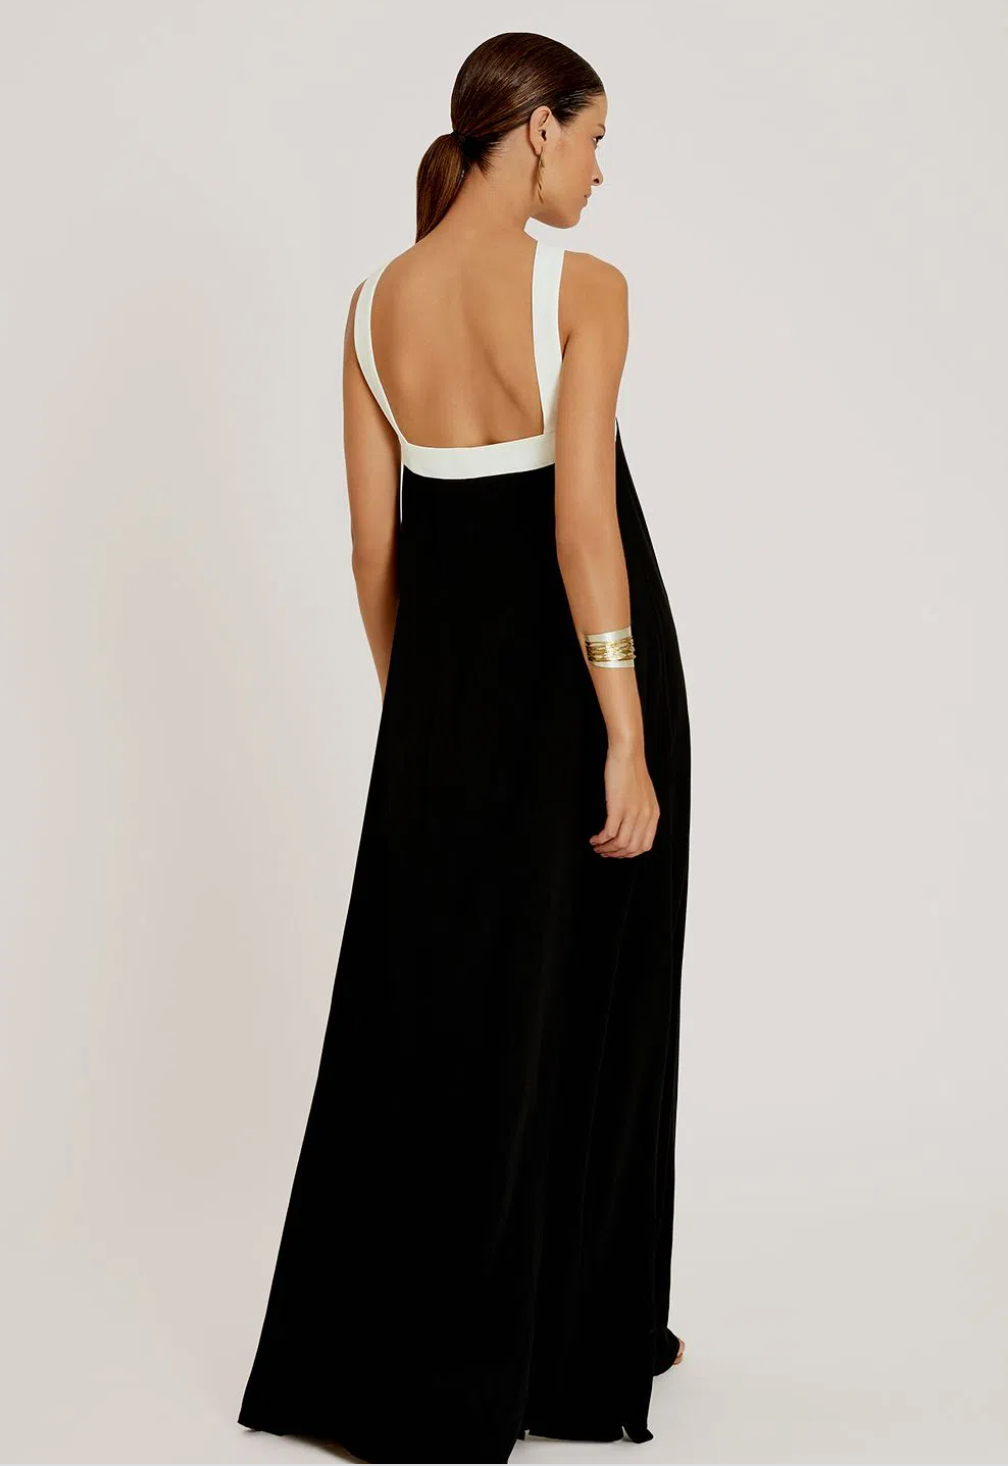 Lenny Niemeyer Cross Strap Dress - Premium Dresses from Marina St Barth - Just $350.00! Shop now at Marina St Barth